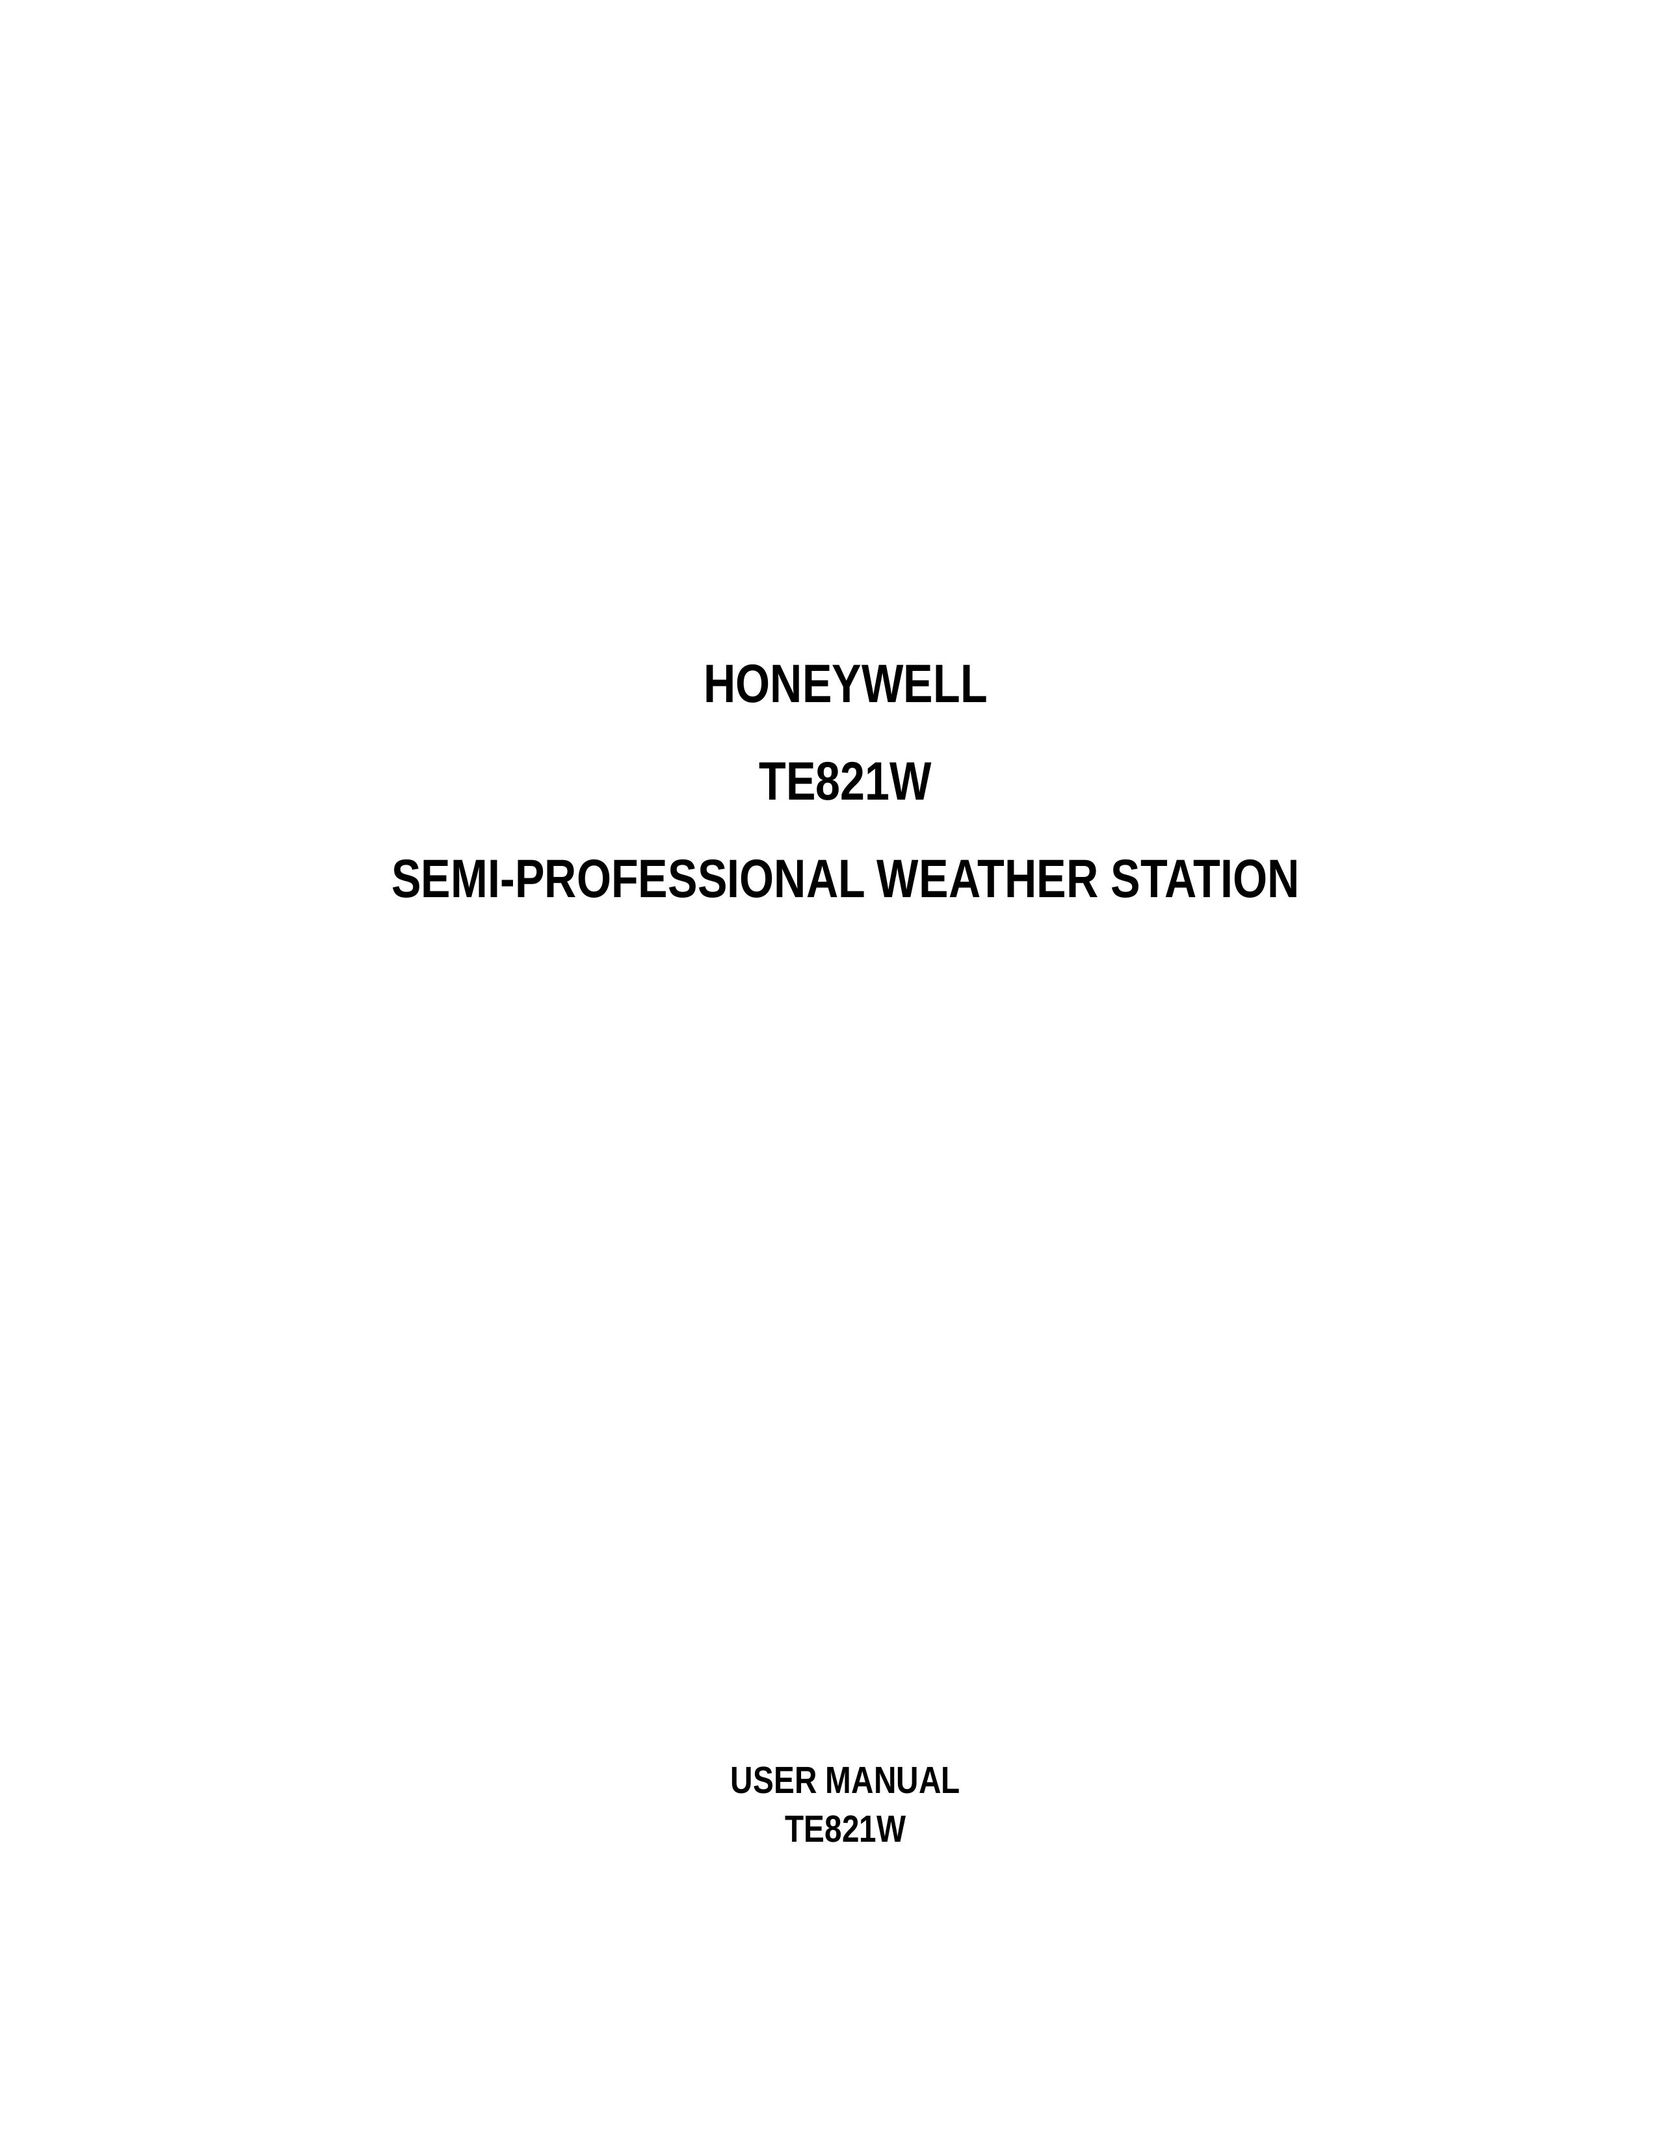 Honeywell TE821W Portable Radio User Manual